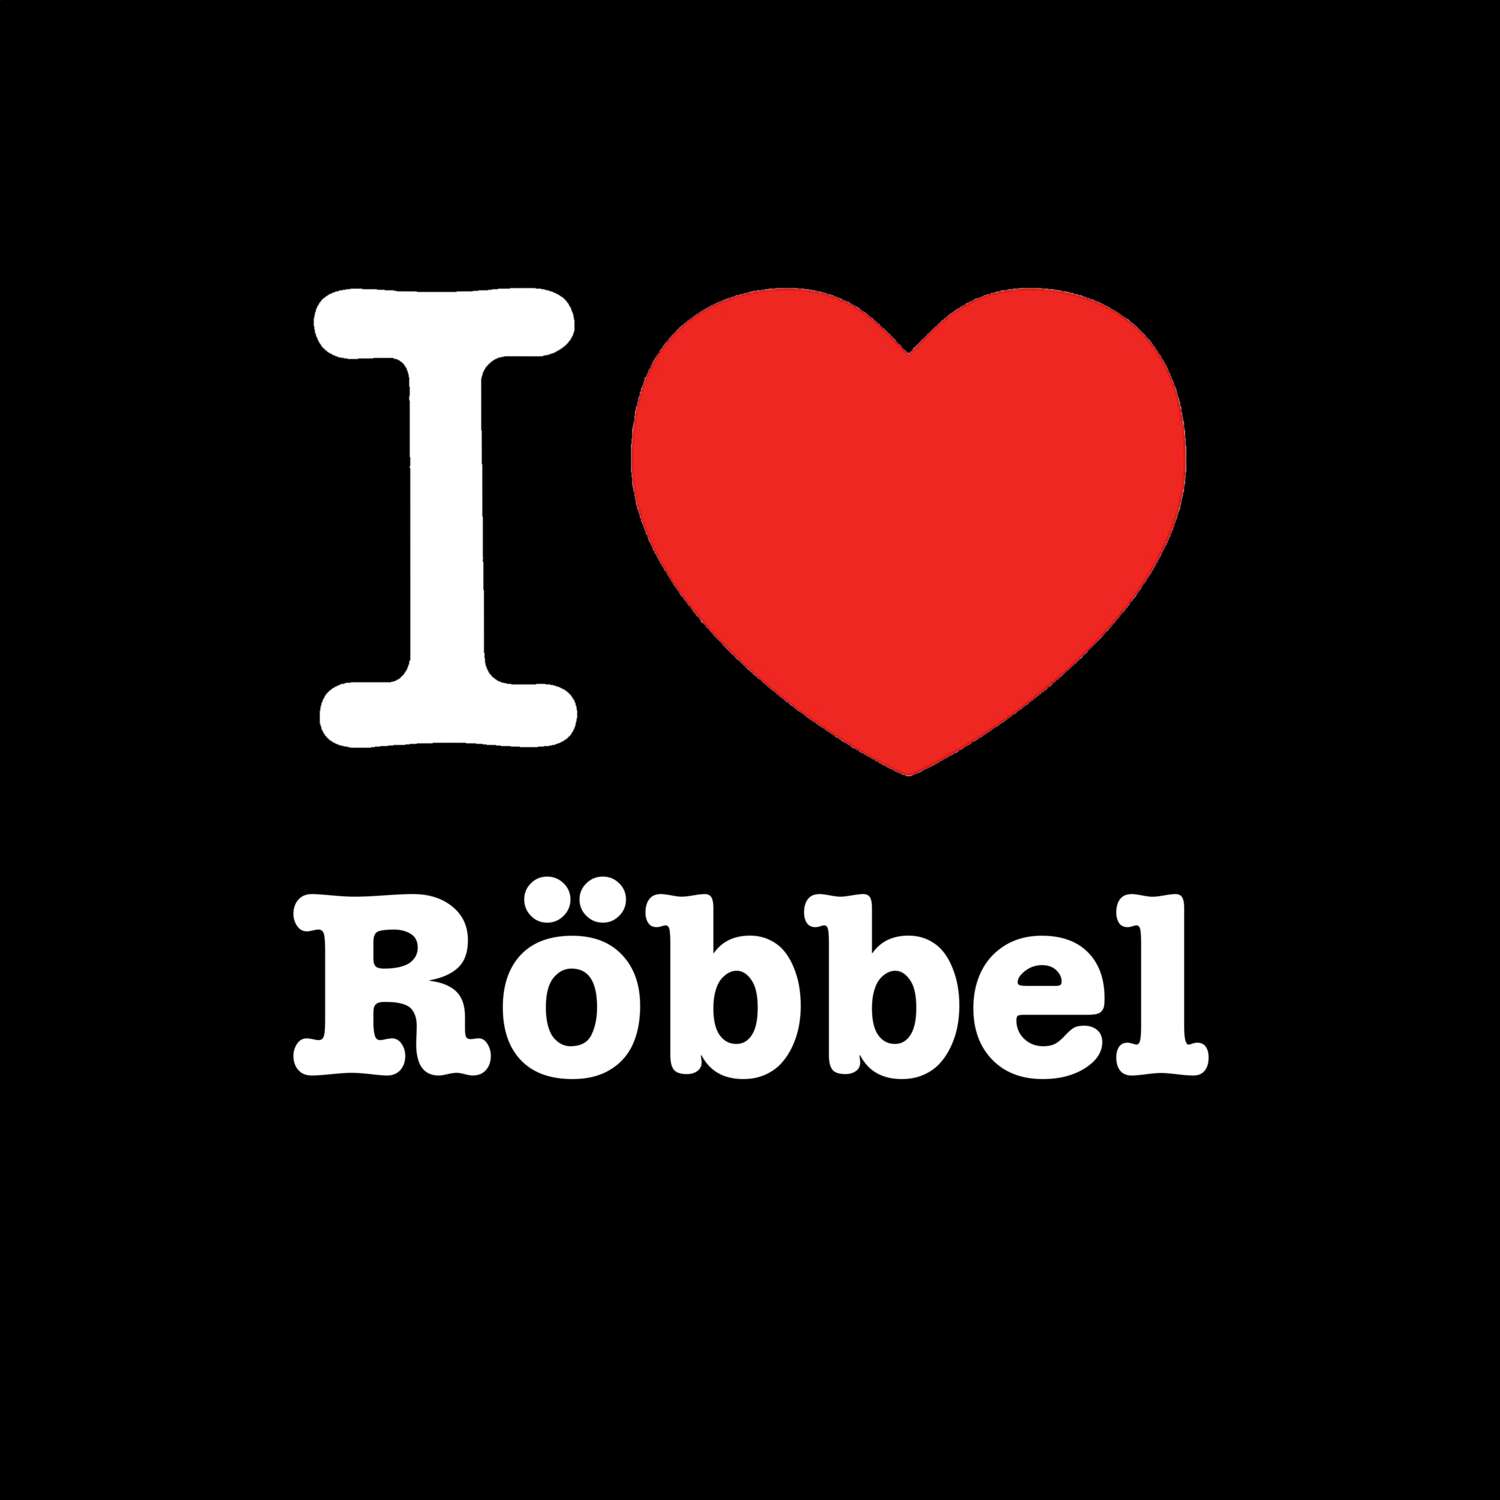 Röbbel T-Shirt »I love«